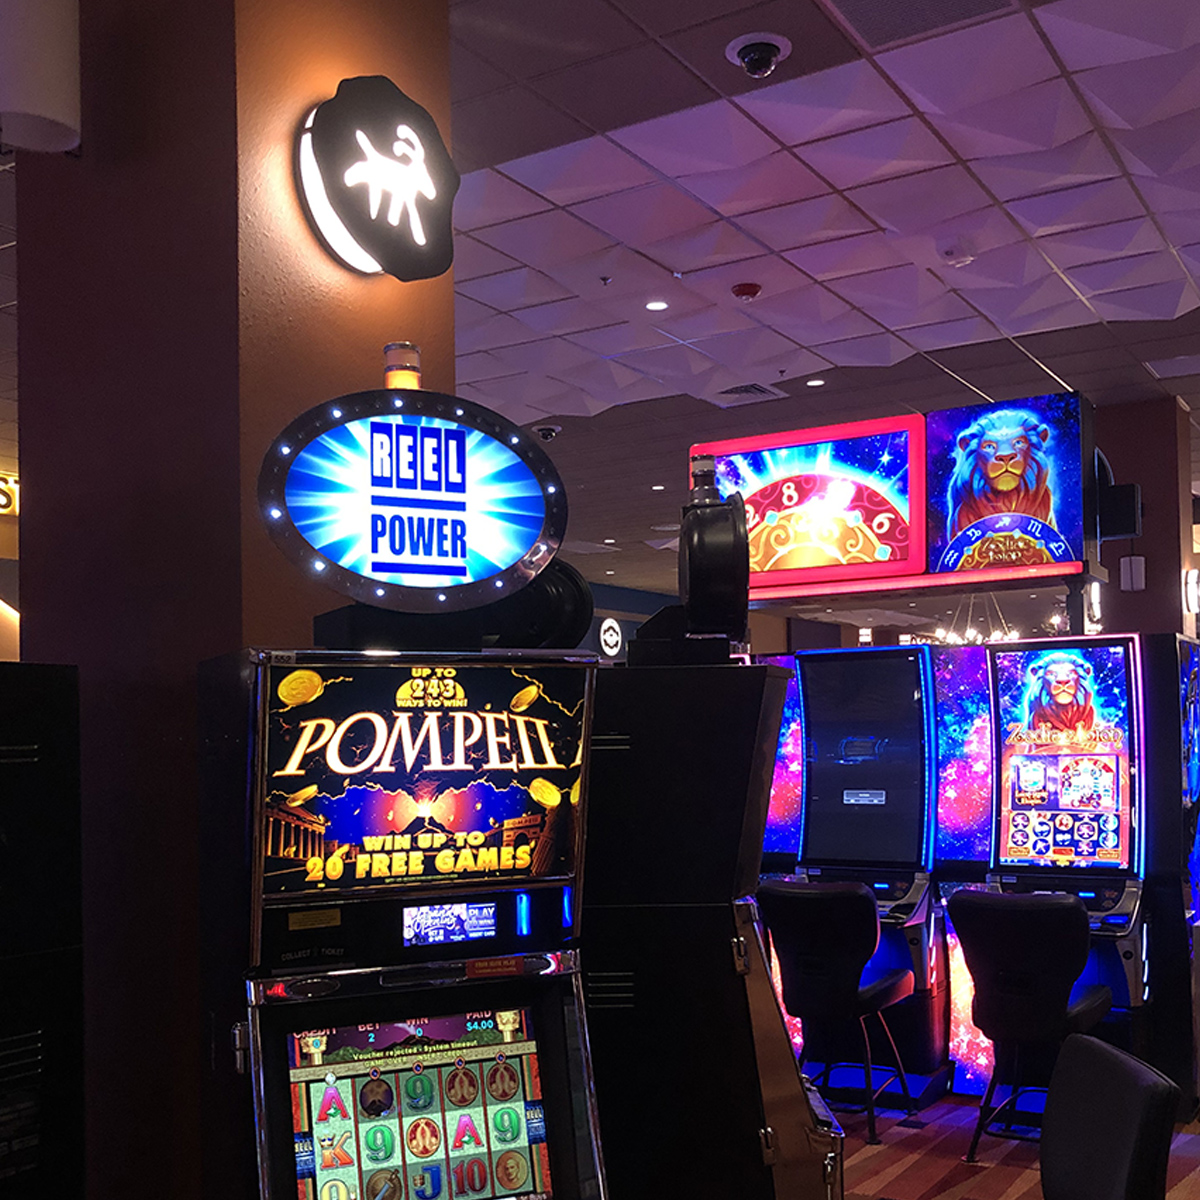 Coushatta casino slot videos